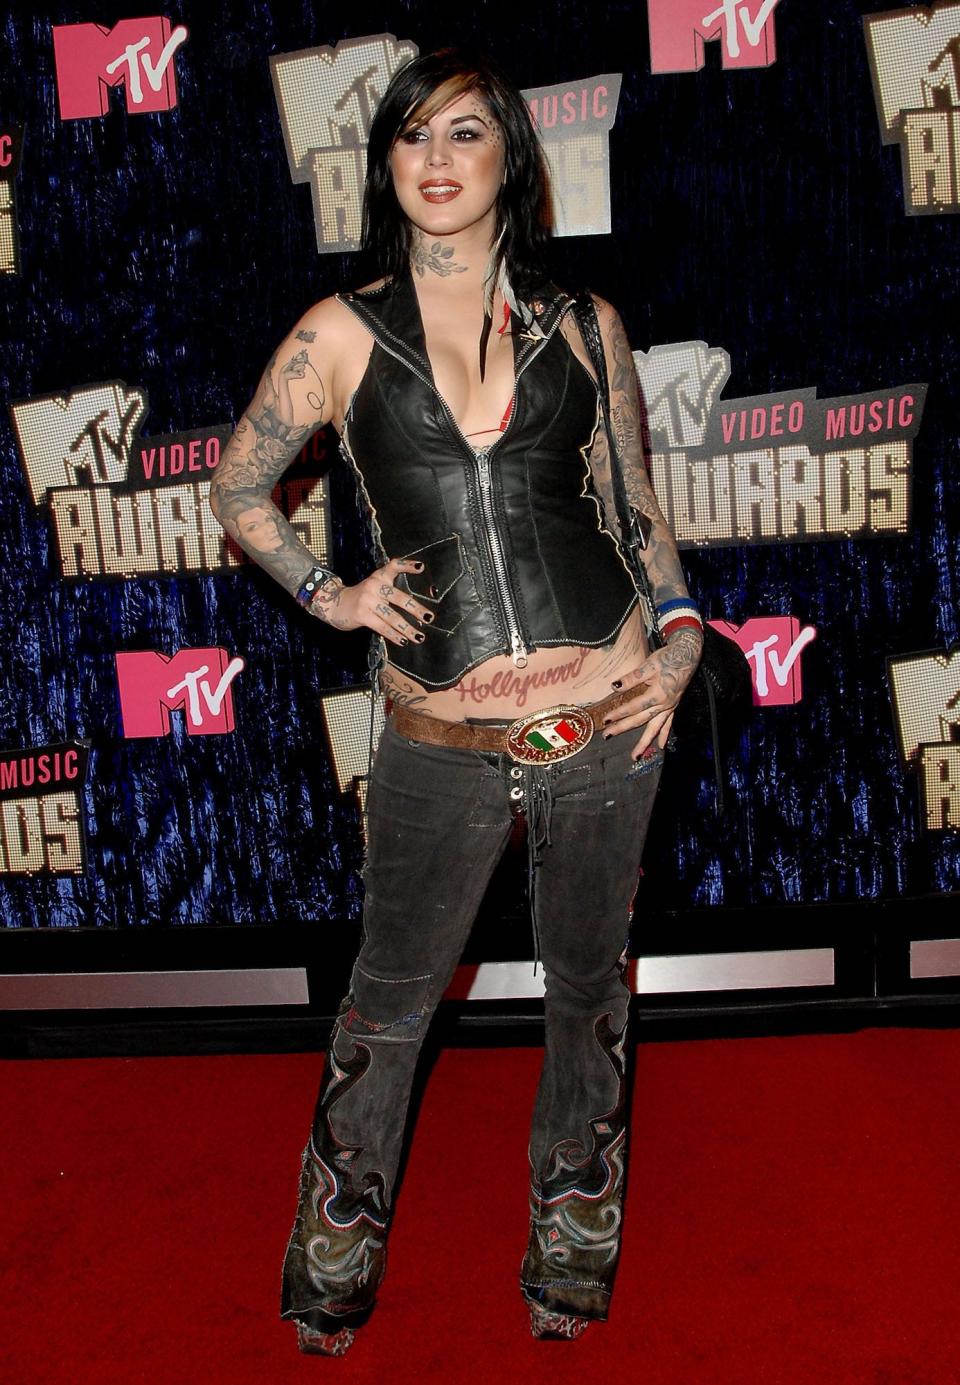 Kat Von D at the 2007 MTV Video Music Awards.